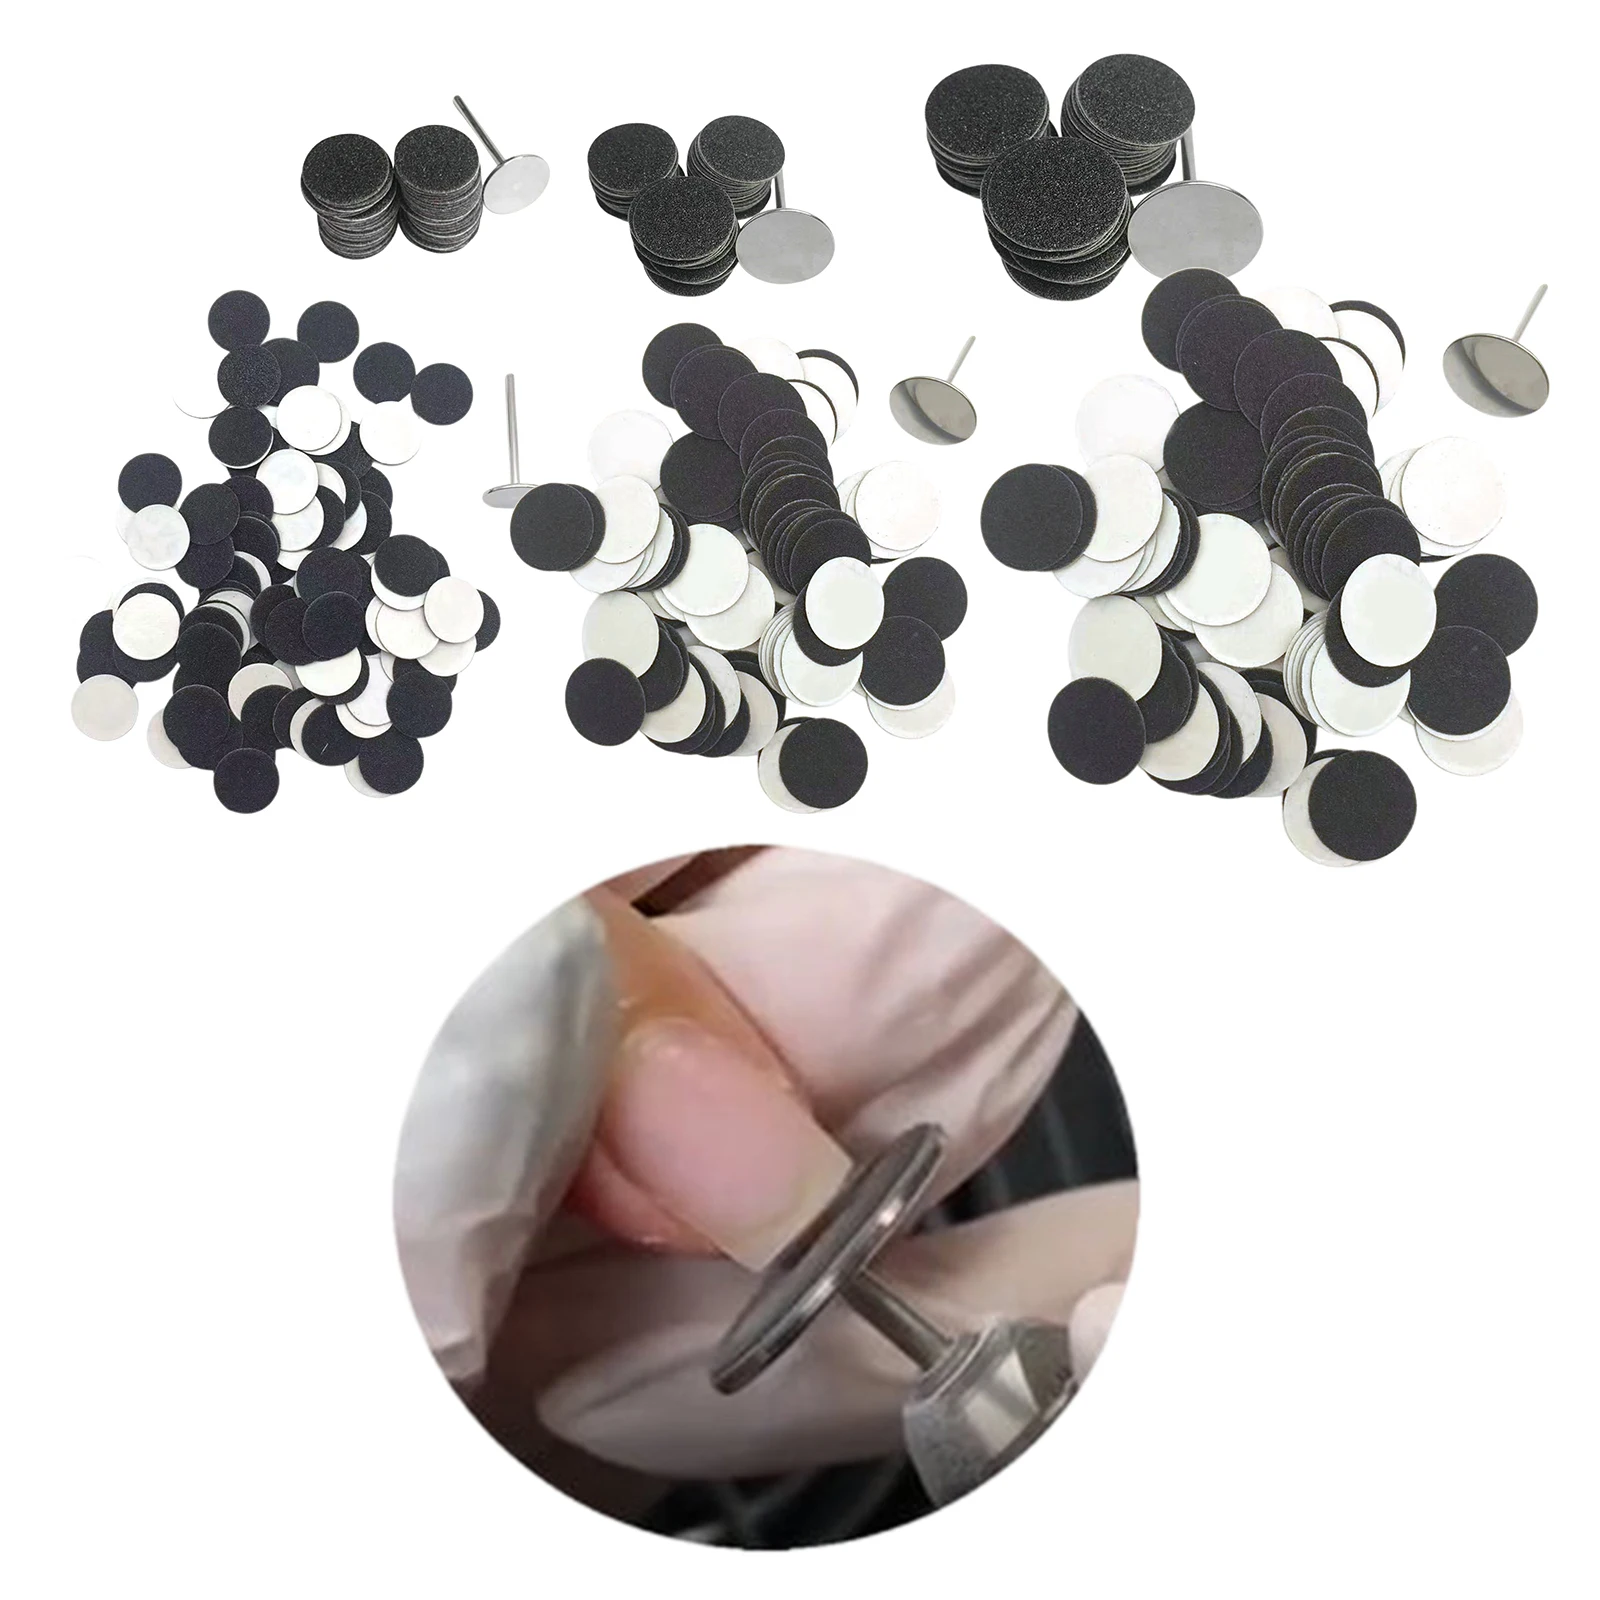 Replacement Sandpaper Discs Sanding Paper Accessory Suit for Electric Foot Rasp Files Hard Skin Callus Remover Pedicure Tools 